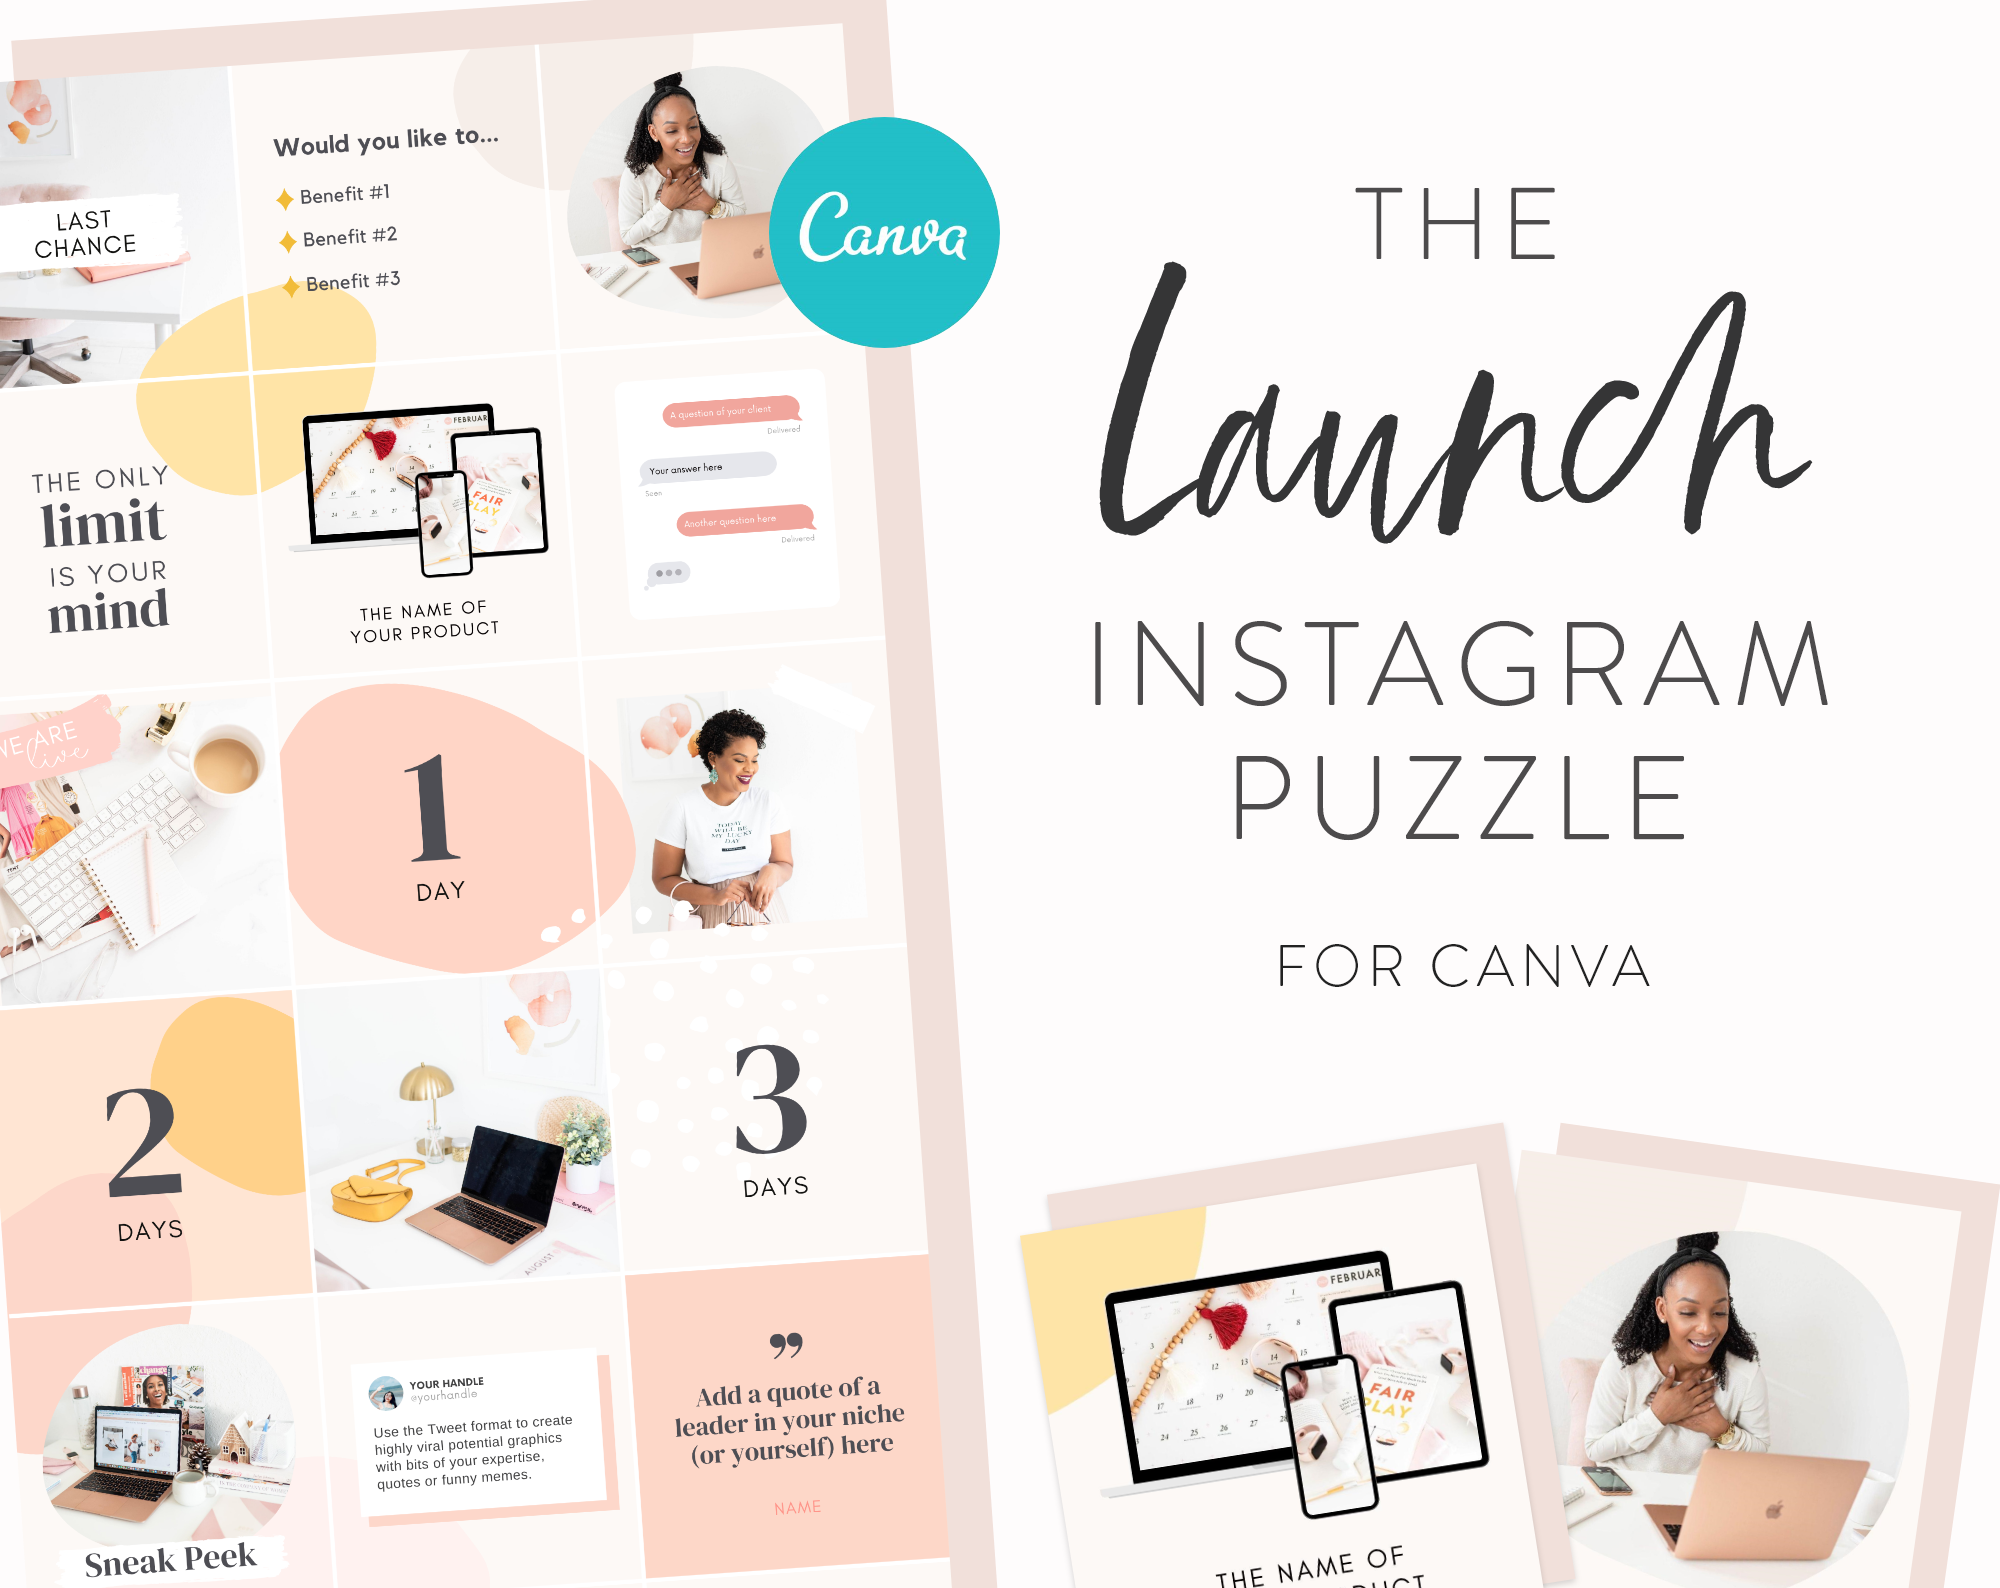 Creative Instagram Templates Small Business Templates Marketing bundle Pink Instagram Puzzle Templates Canva Social Media Templates